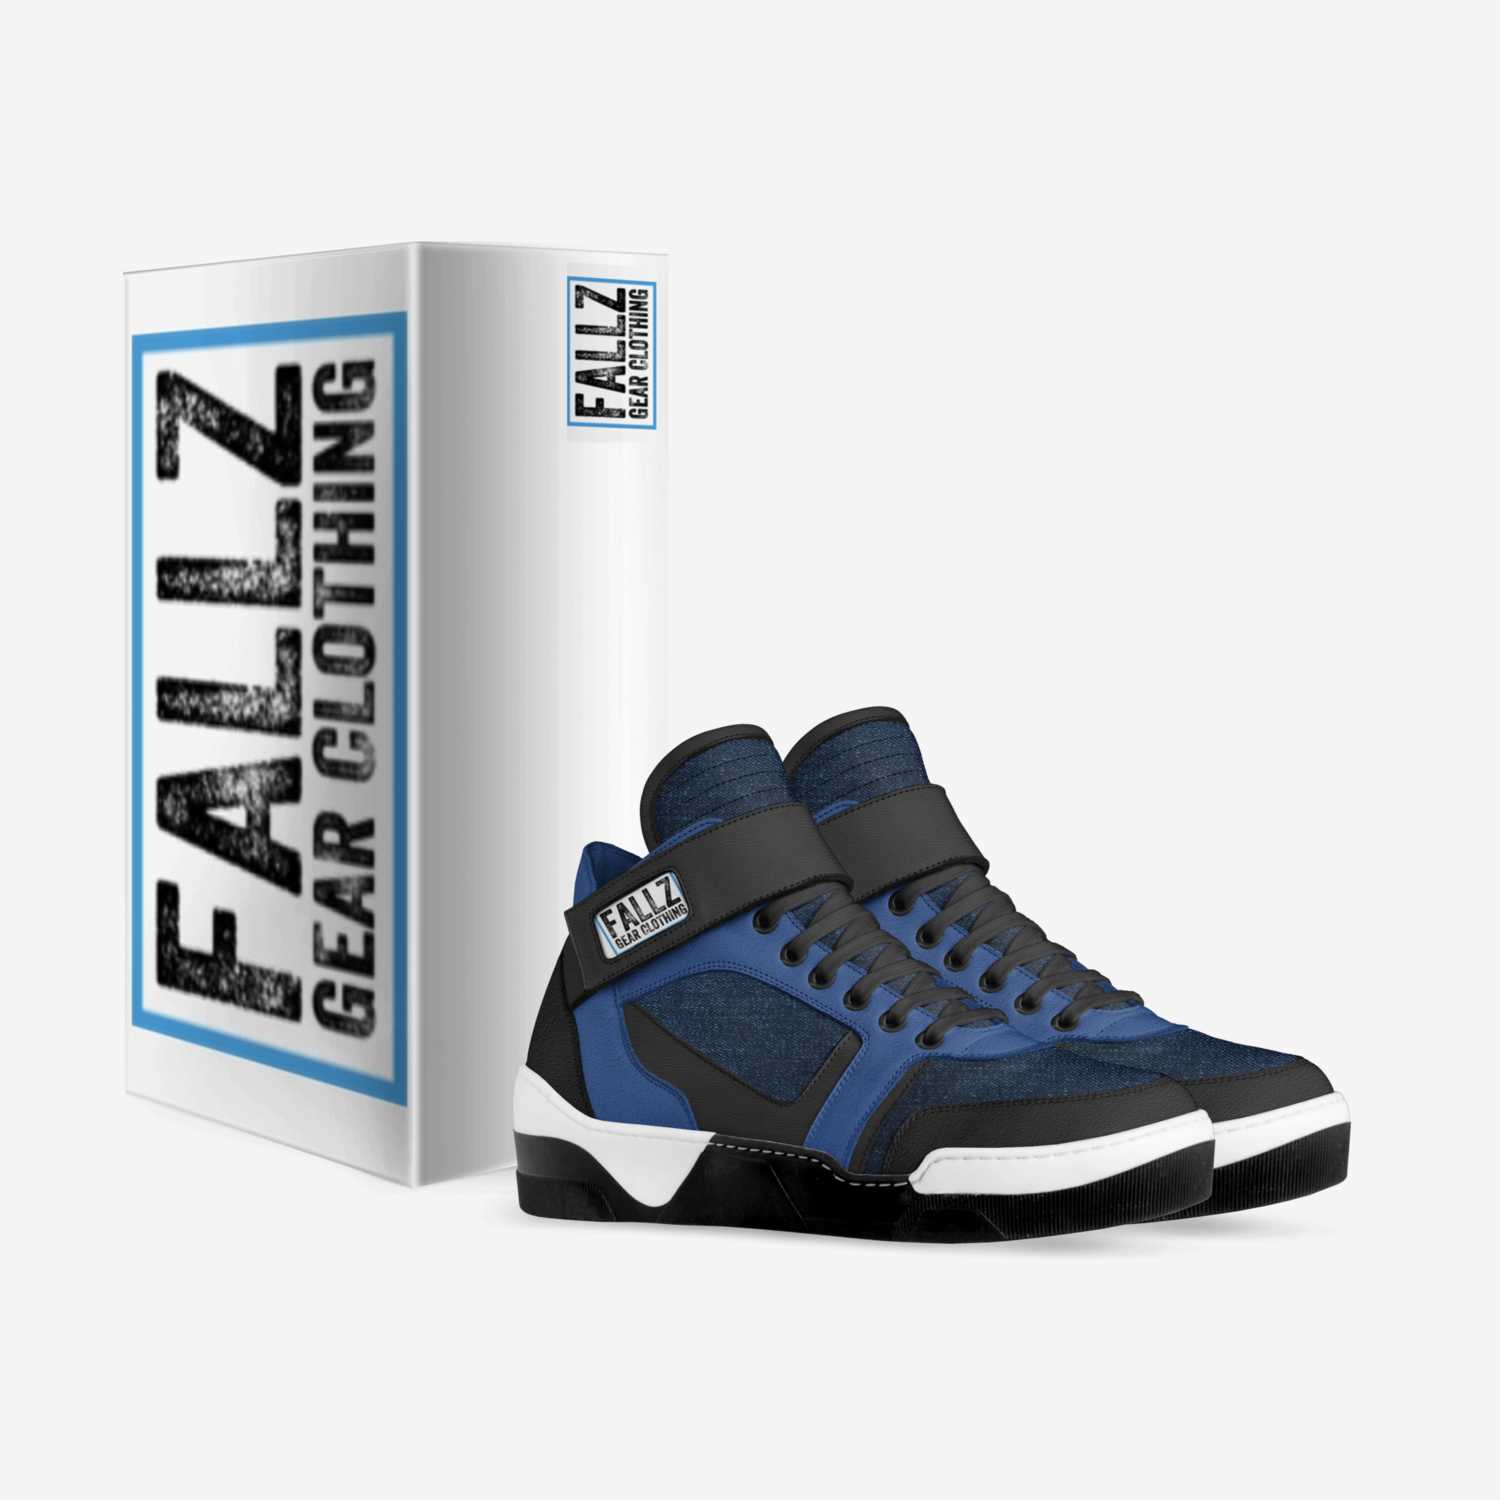 Fallz Gear custom made in Italy shoes by Fallz Gear | Box view